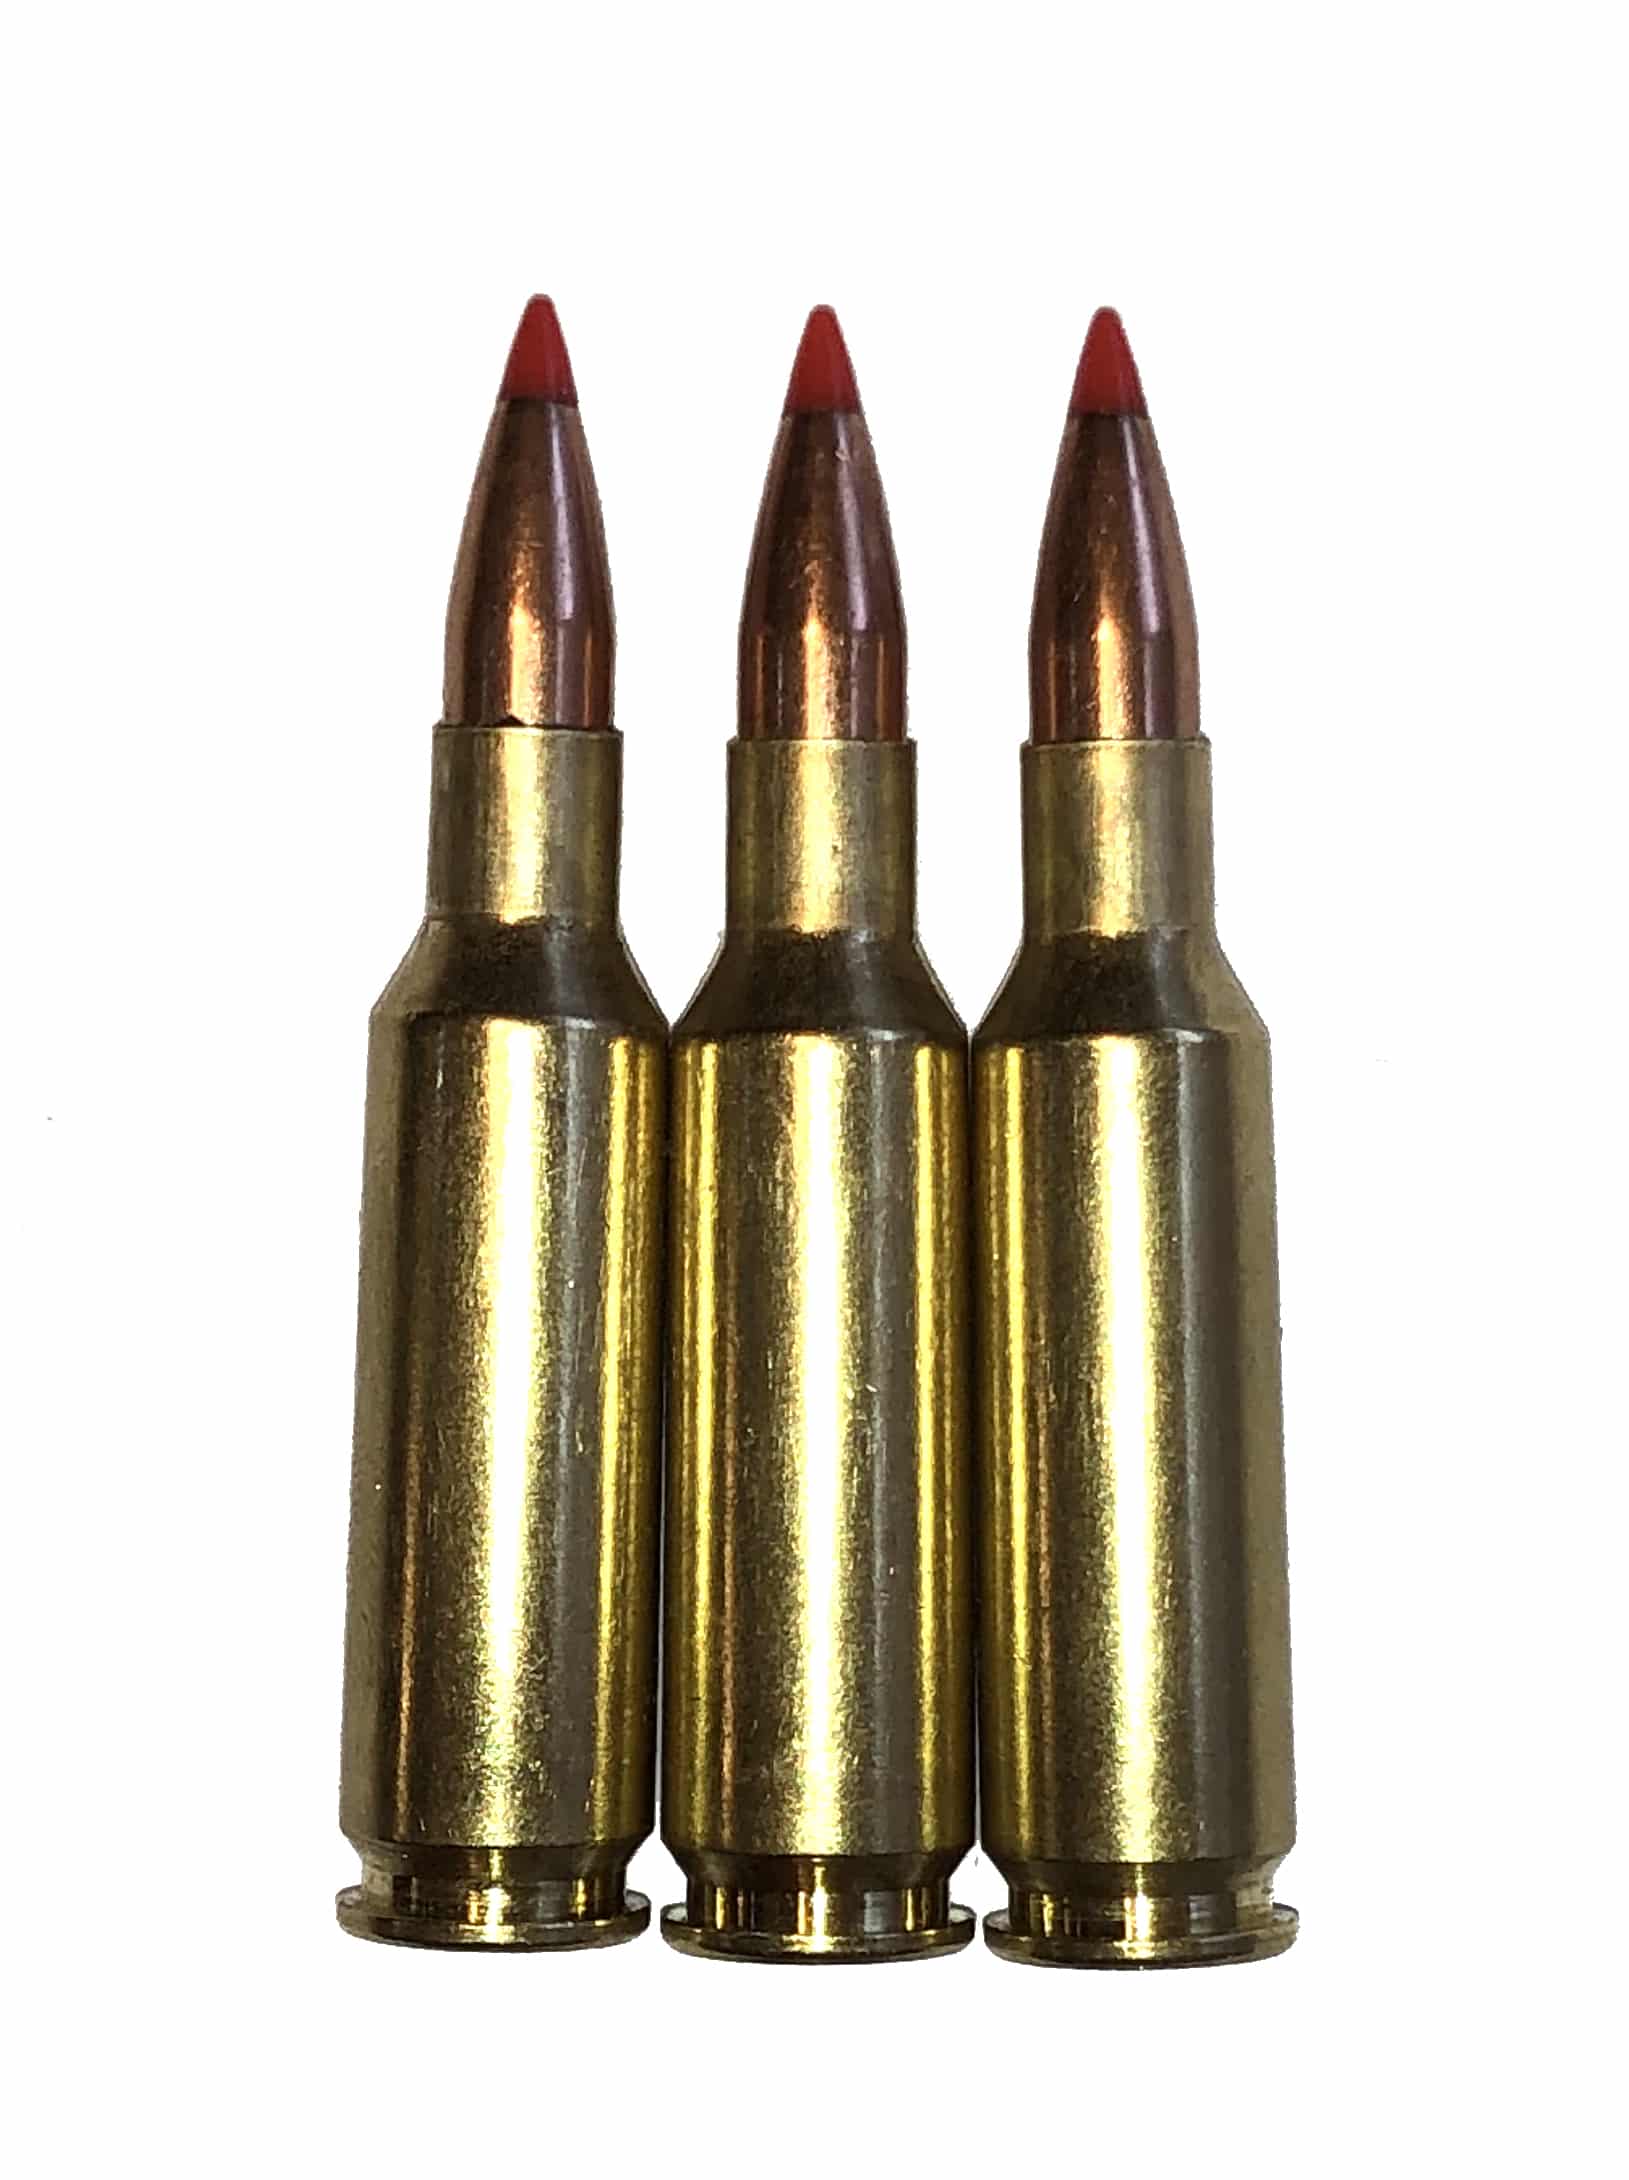 224 Valkyrie Dummy Rounds Snap Caps Fake Bullets J&M Spec INERT